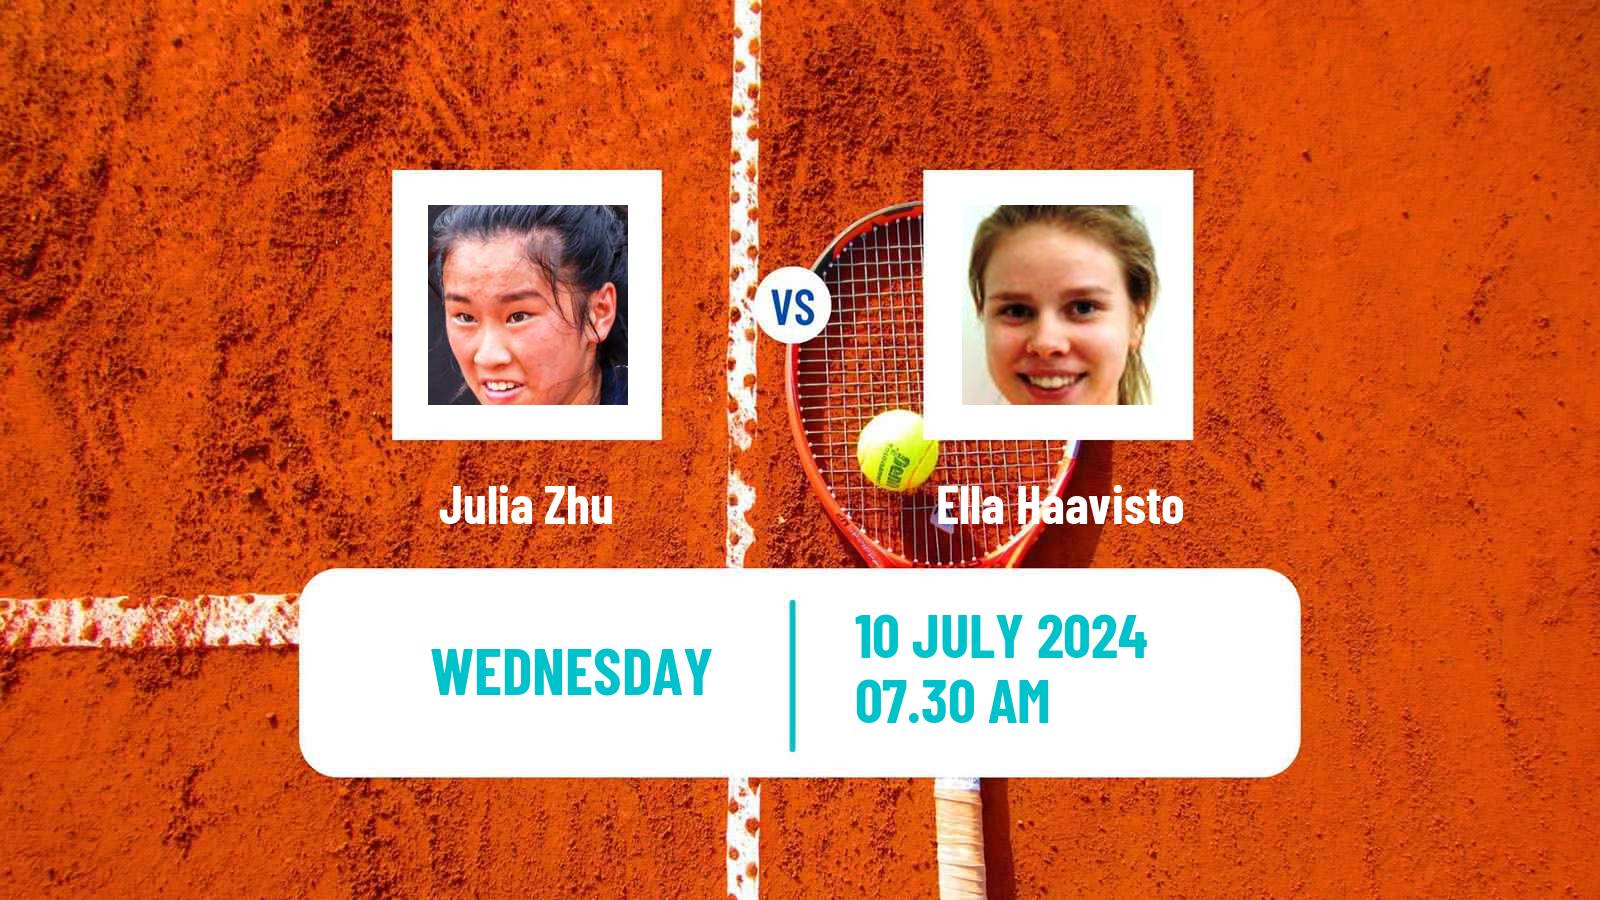 Tennis ITF W15 Grodzisk Mazowiecki Women Julia Zhu - Ella Haavisto